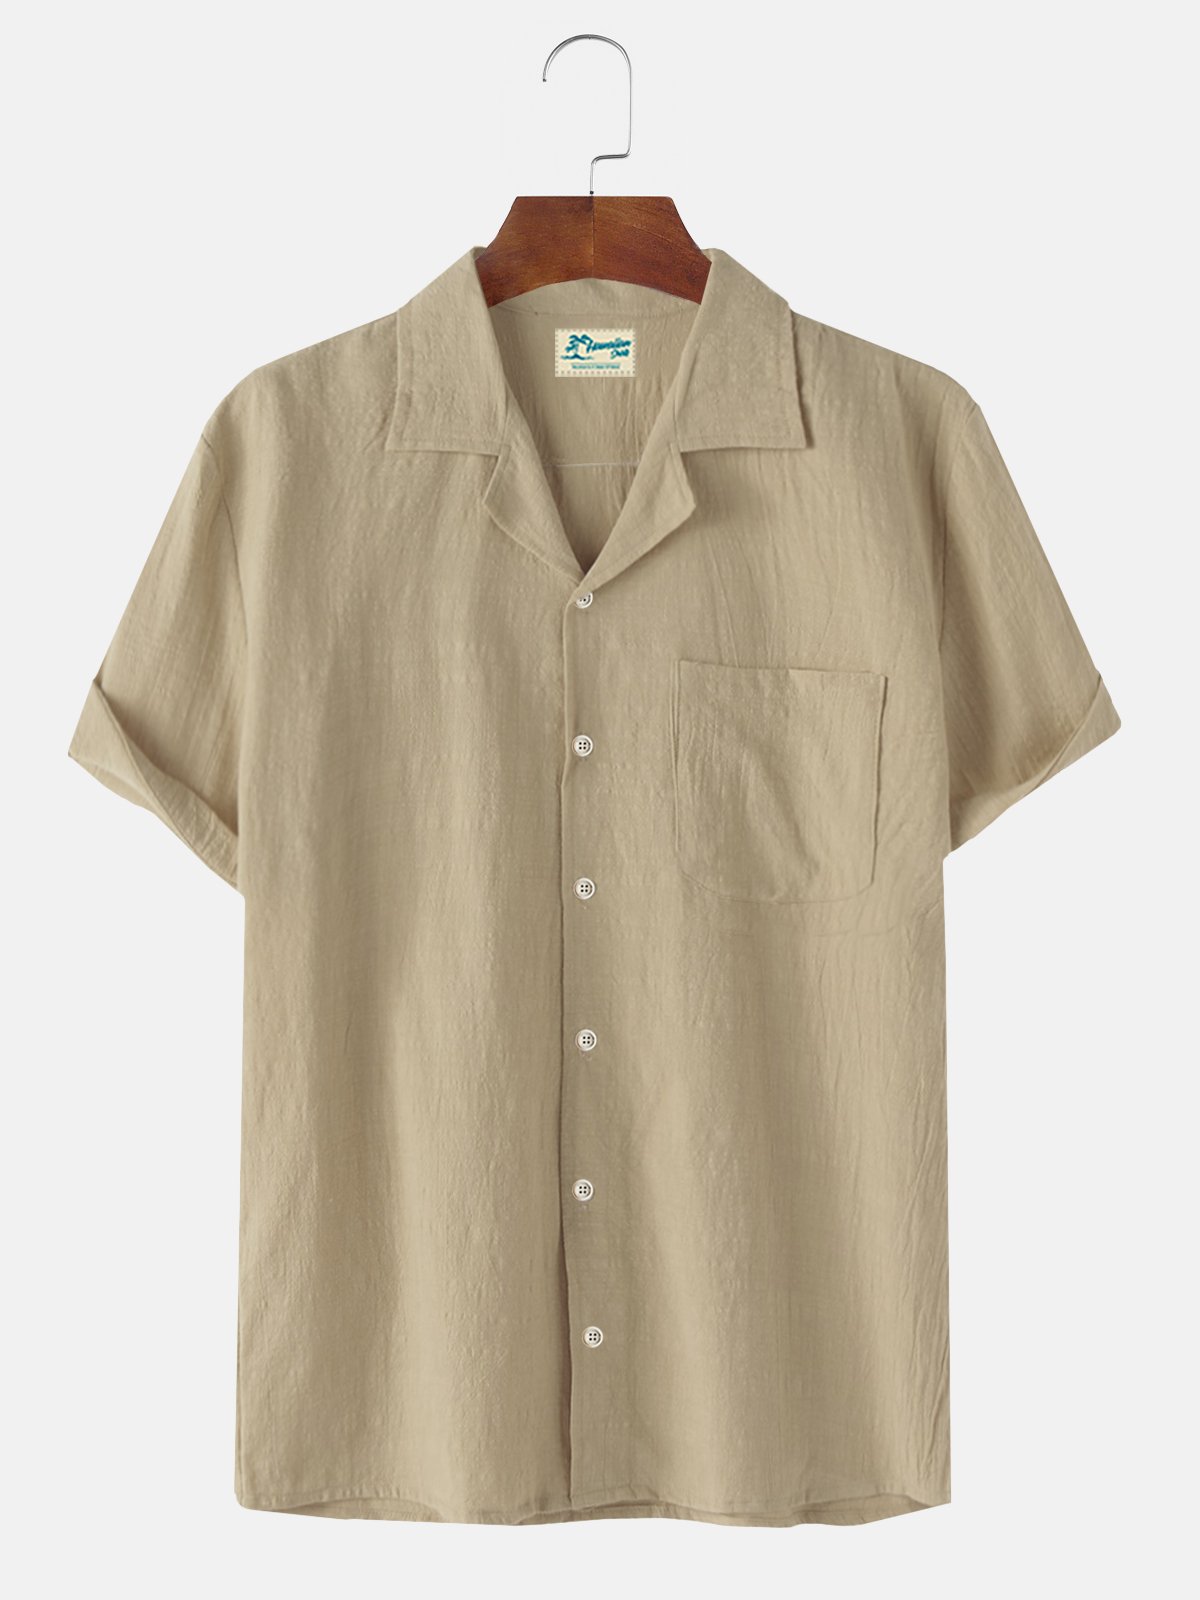 Royaura Solid Color Men's Natural Fiber Blend Camp Shirts Beach Vacation Casual Button Down Camp Shirts